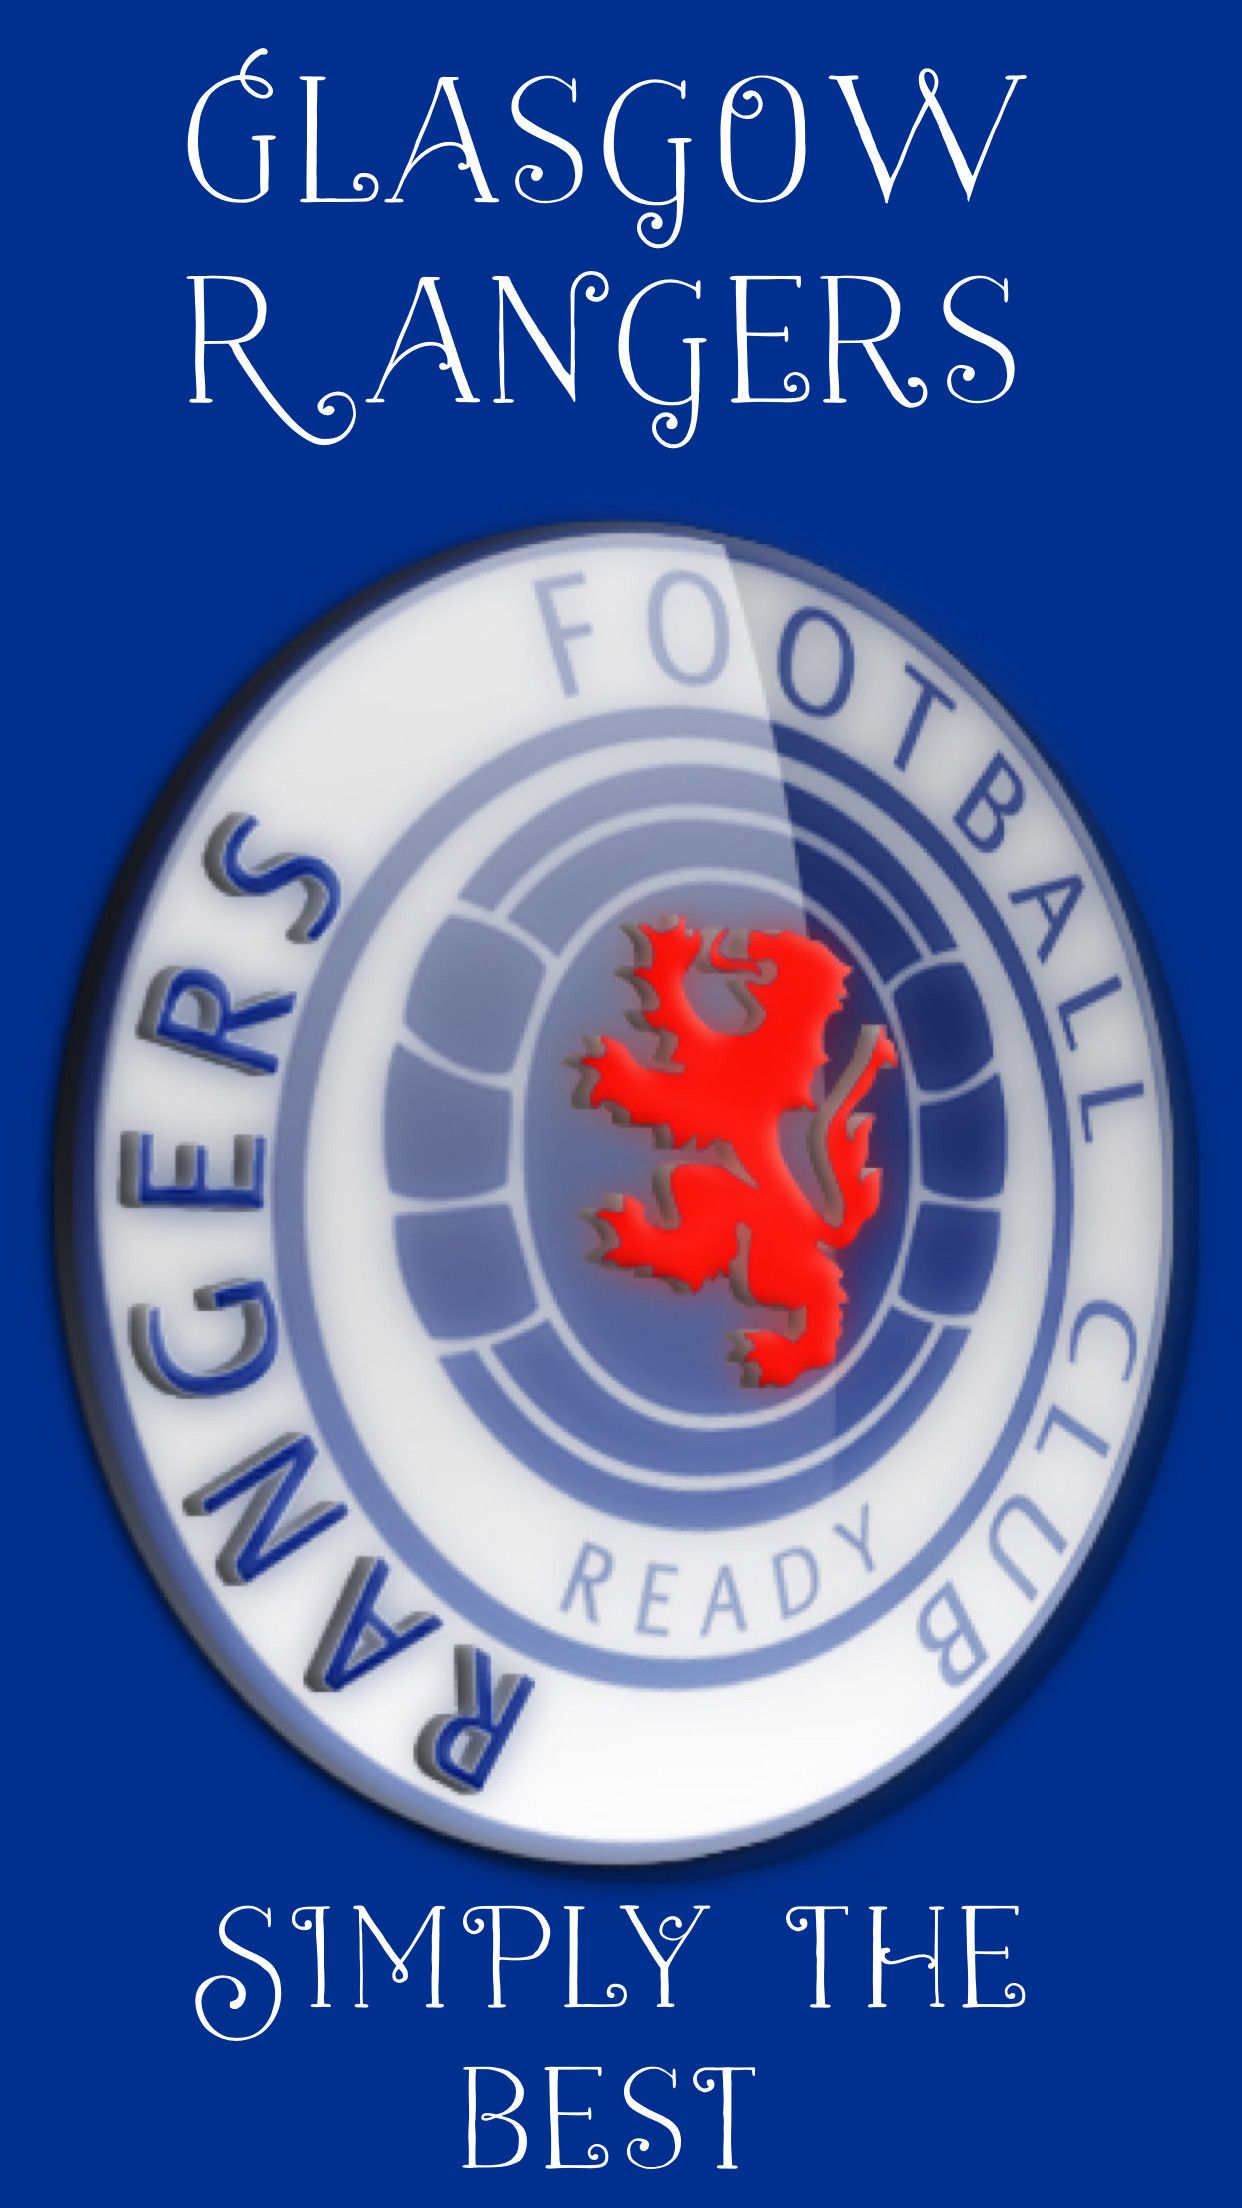 Rangers Fc, Glasgow, Scotland, Legends Data Src Glasgow Rangers Simply The Best HD Wallpaper